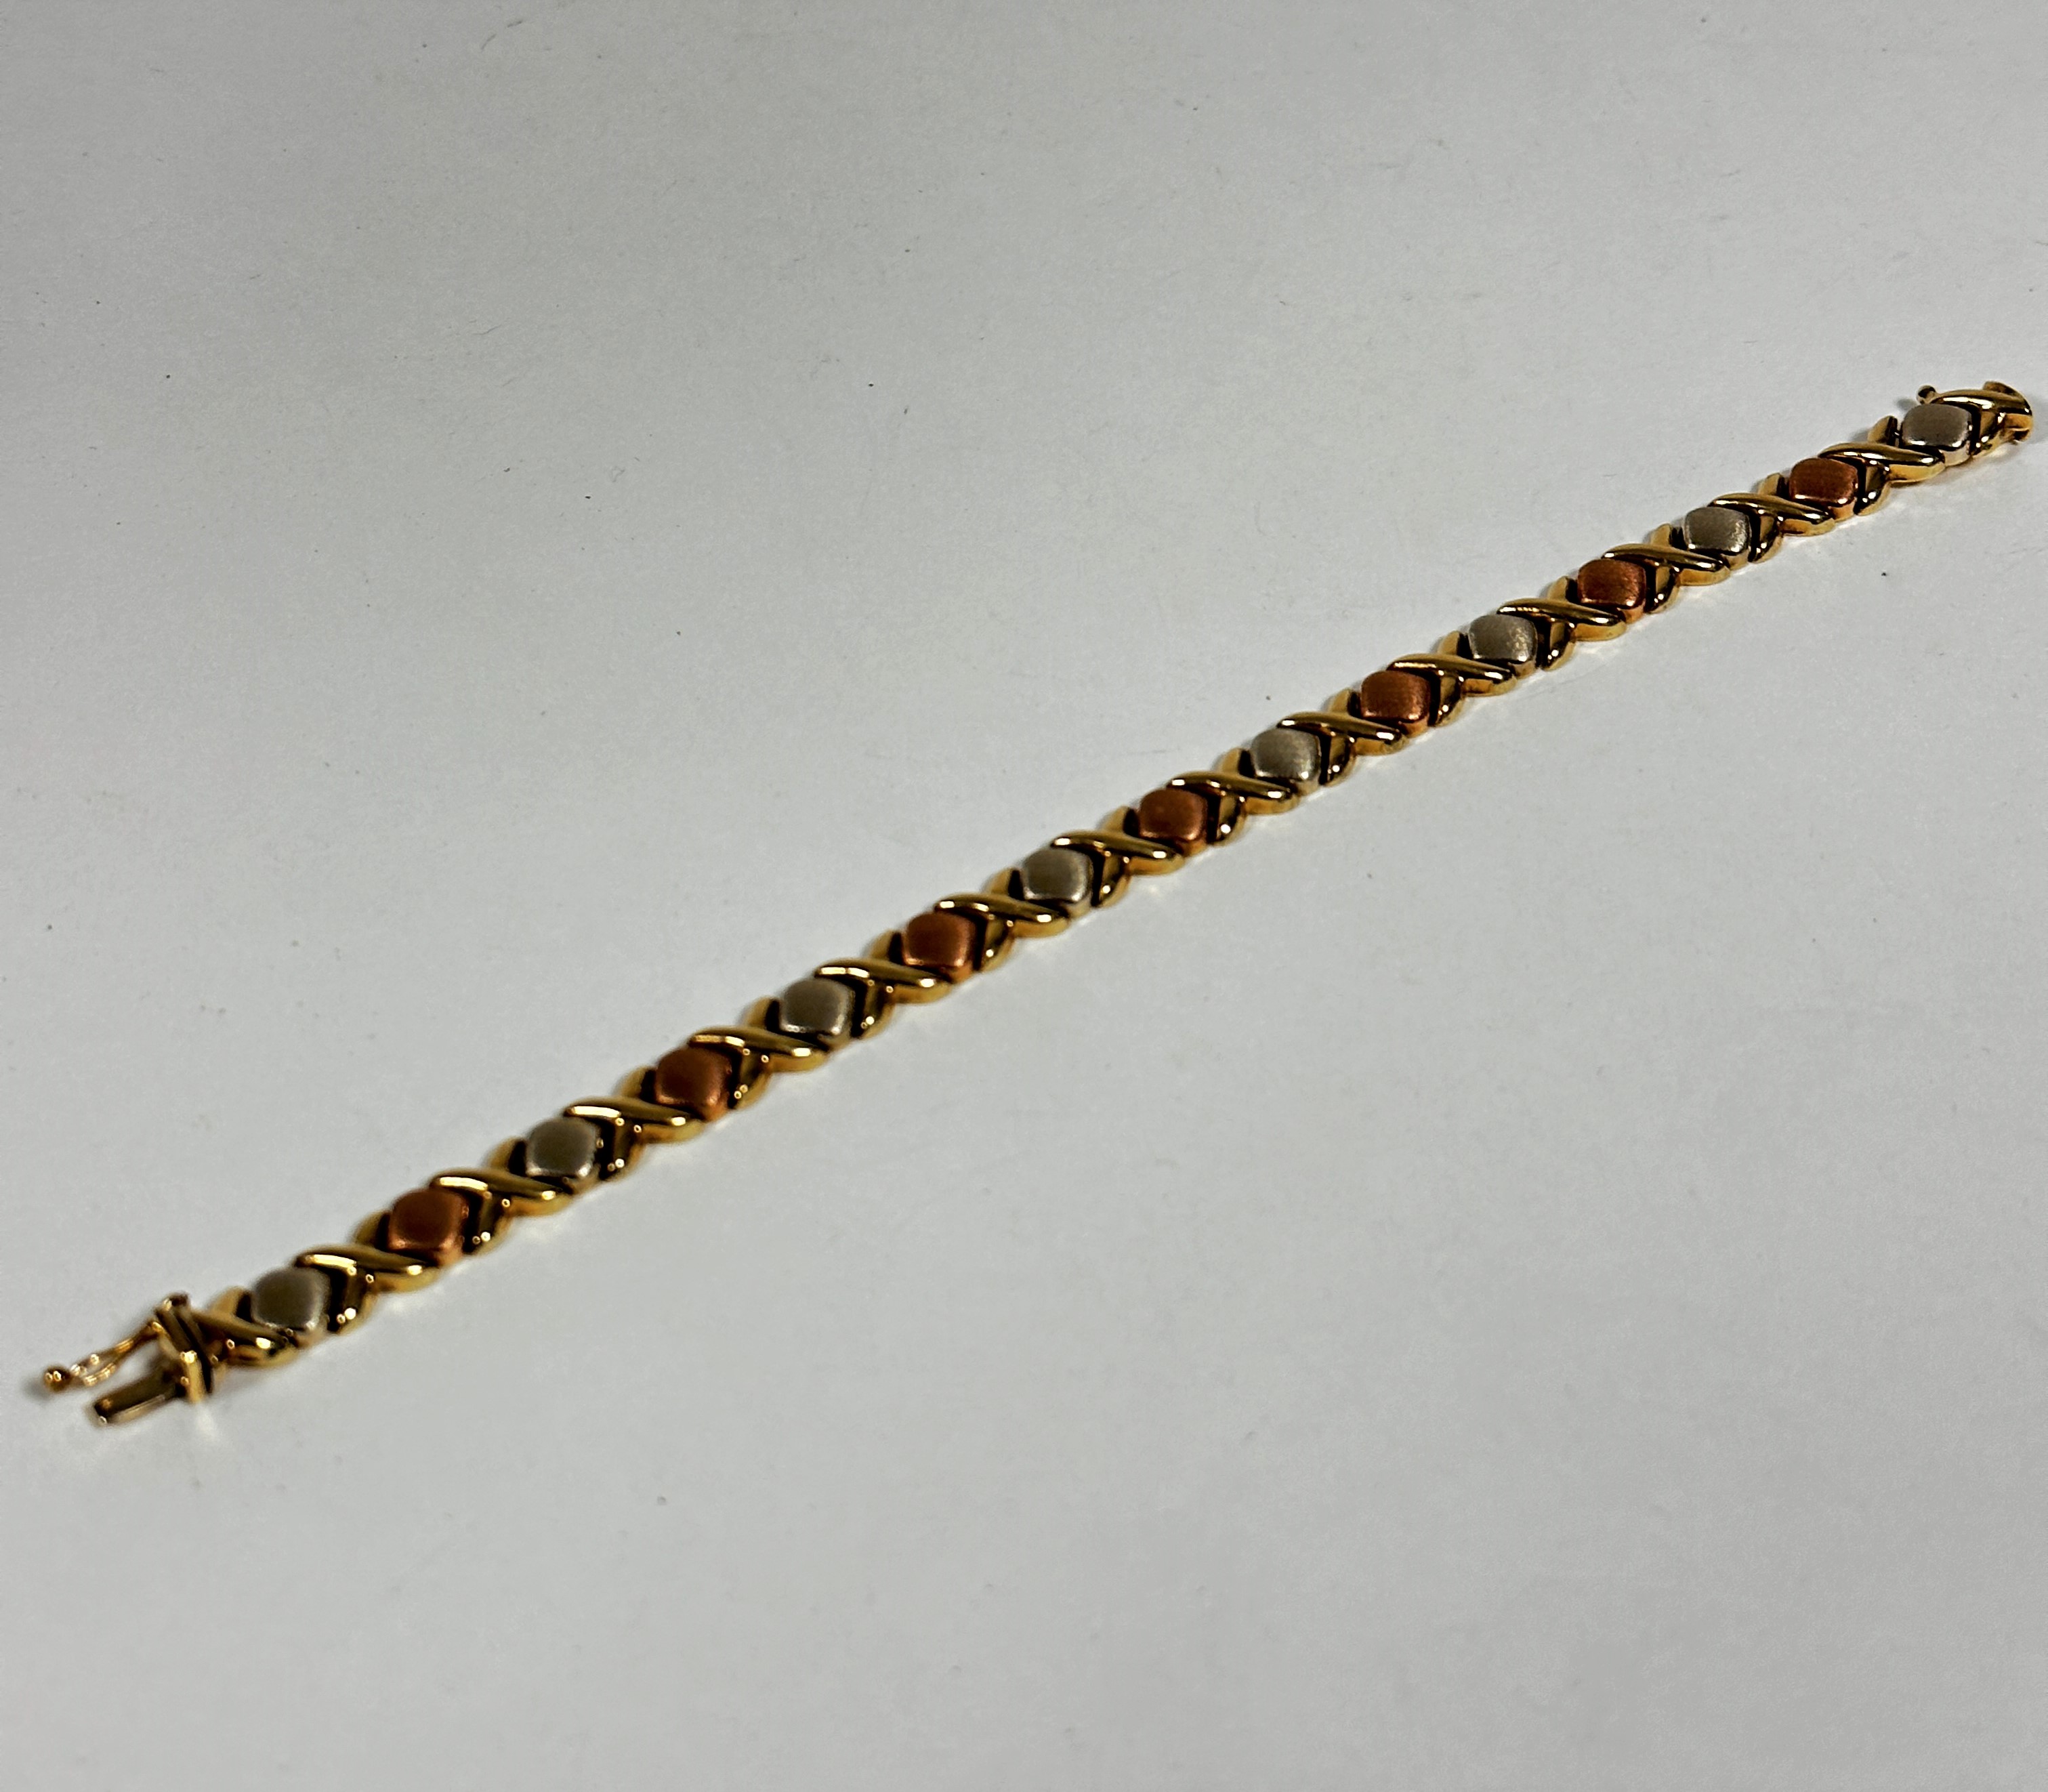 A three coloured 9ct gold bracelet (L: 18.5cm) (10g) shows no signs of damage, restoration or